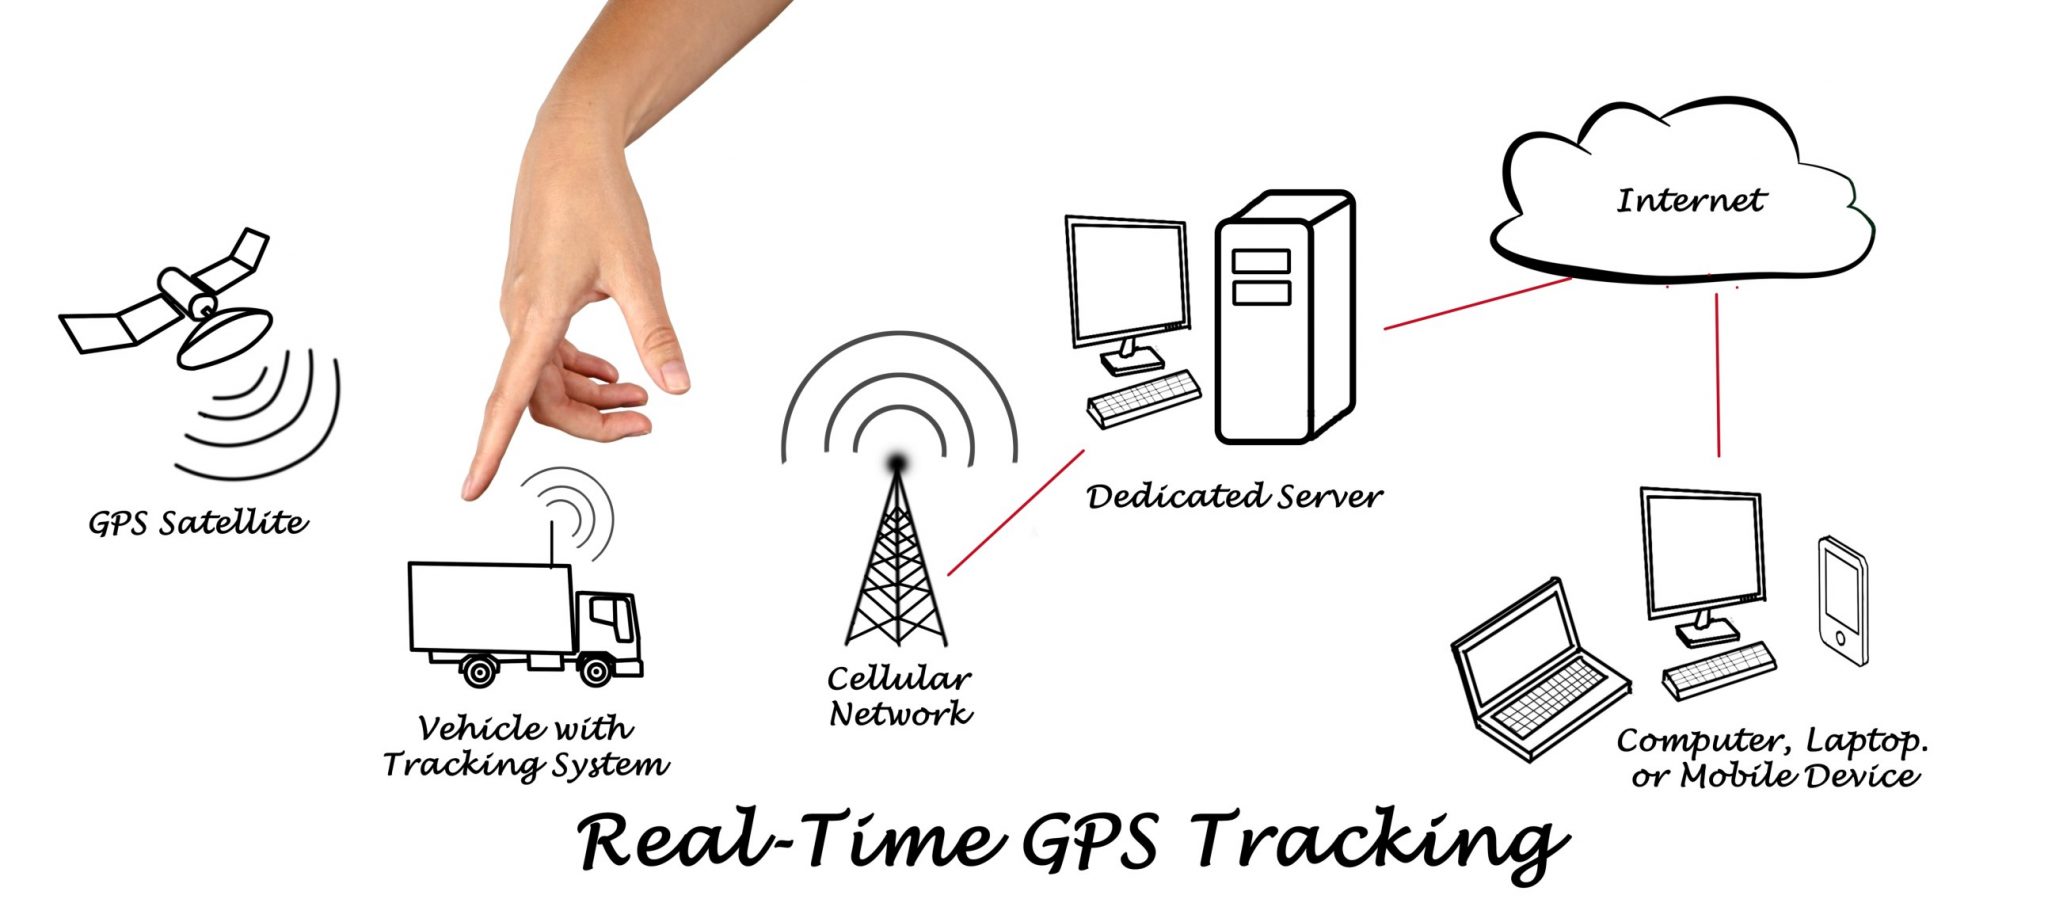 ALTERNATIVE USES FOR A GPS TRACKER